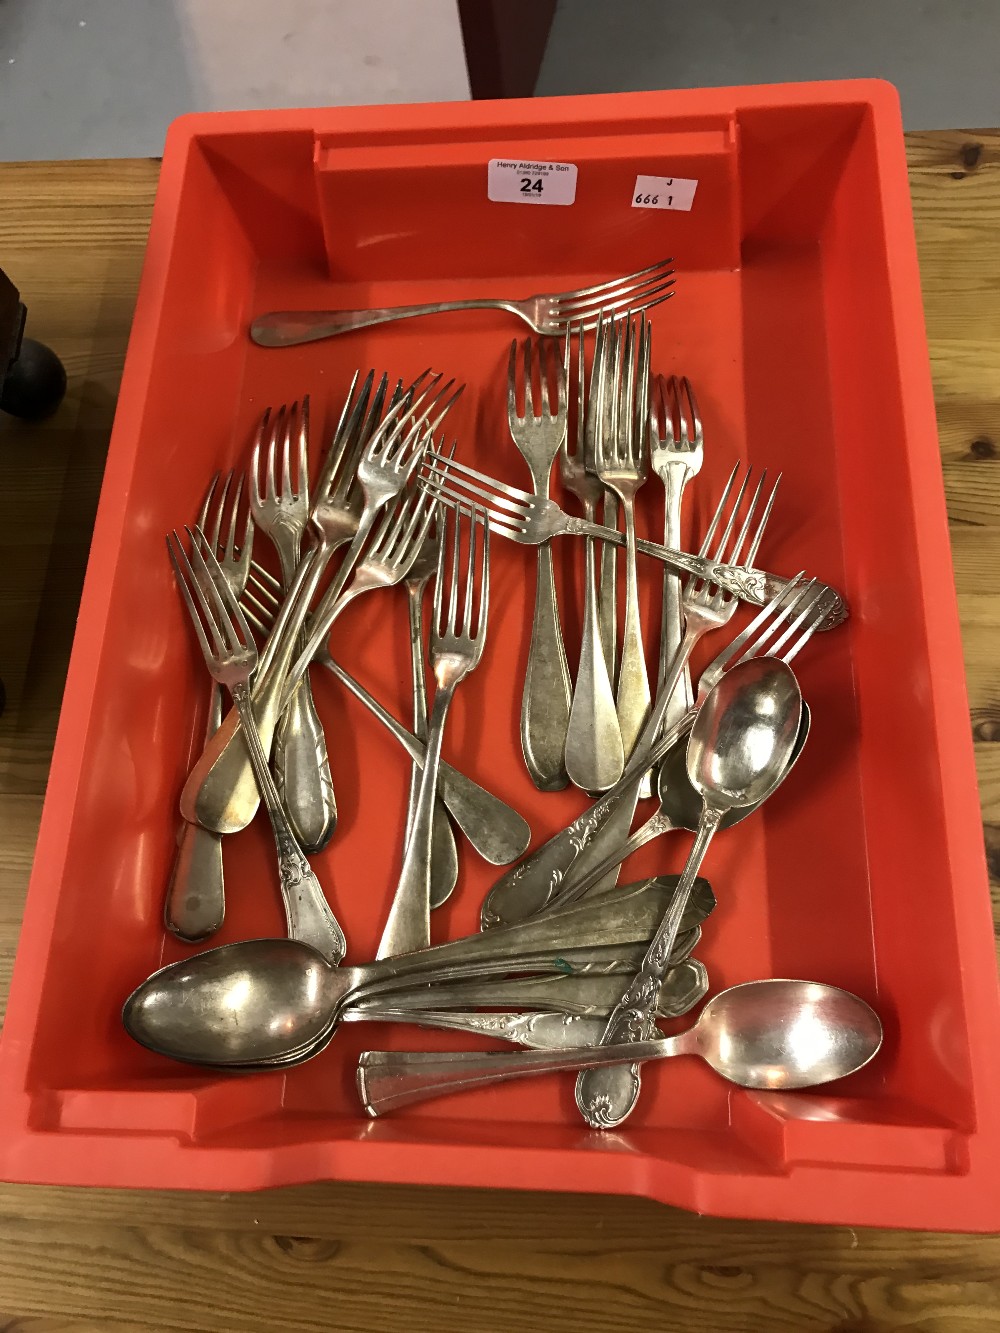 Platedware: French flatware including Christofle forks.